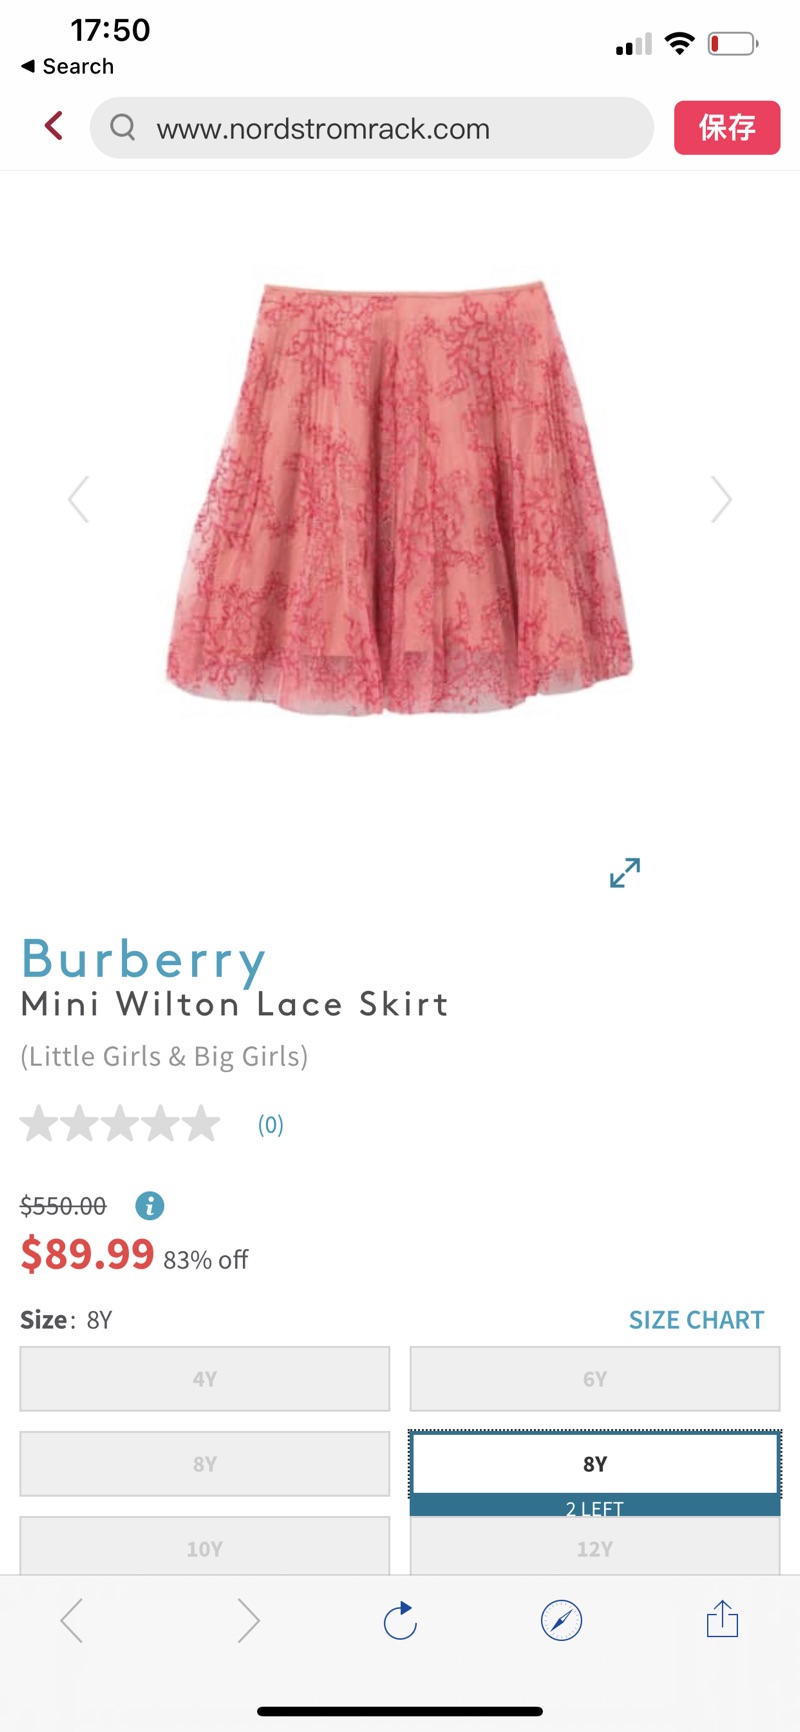 Burberry Mini Wilton Lace Skirt 蕾丝裙见到90刀